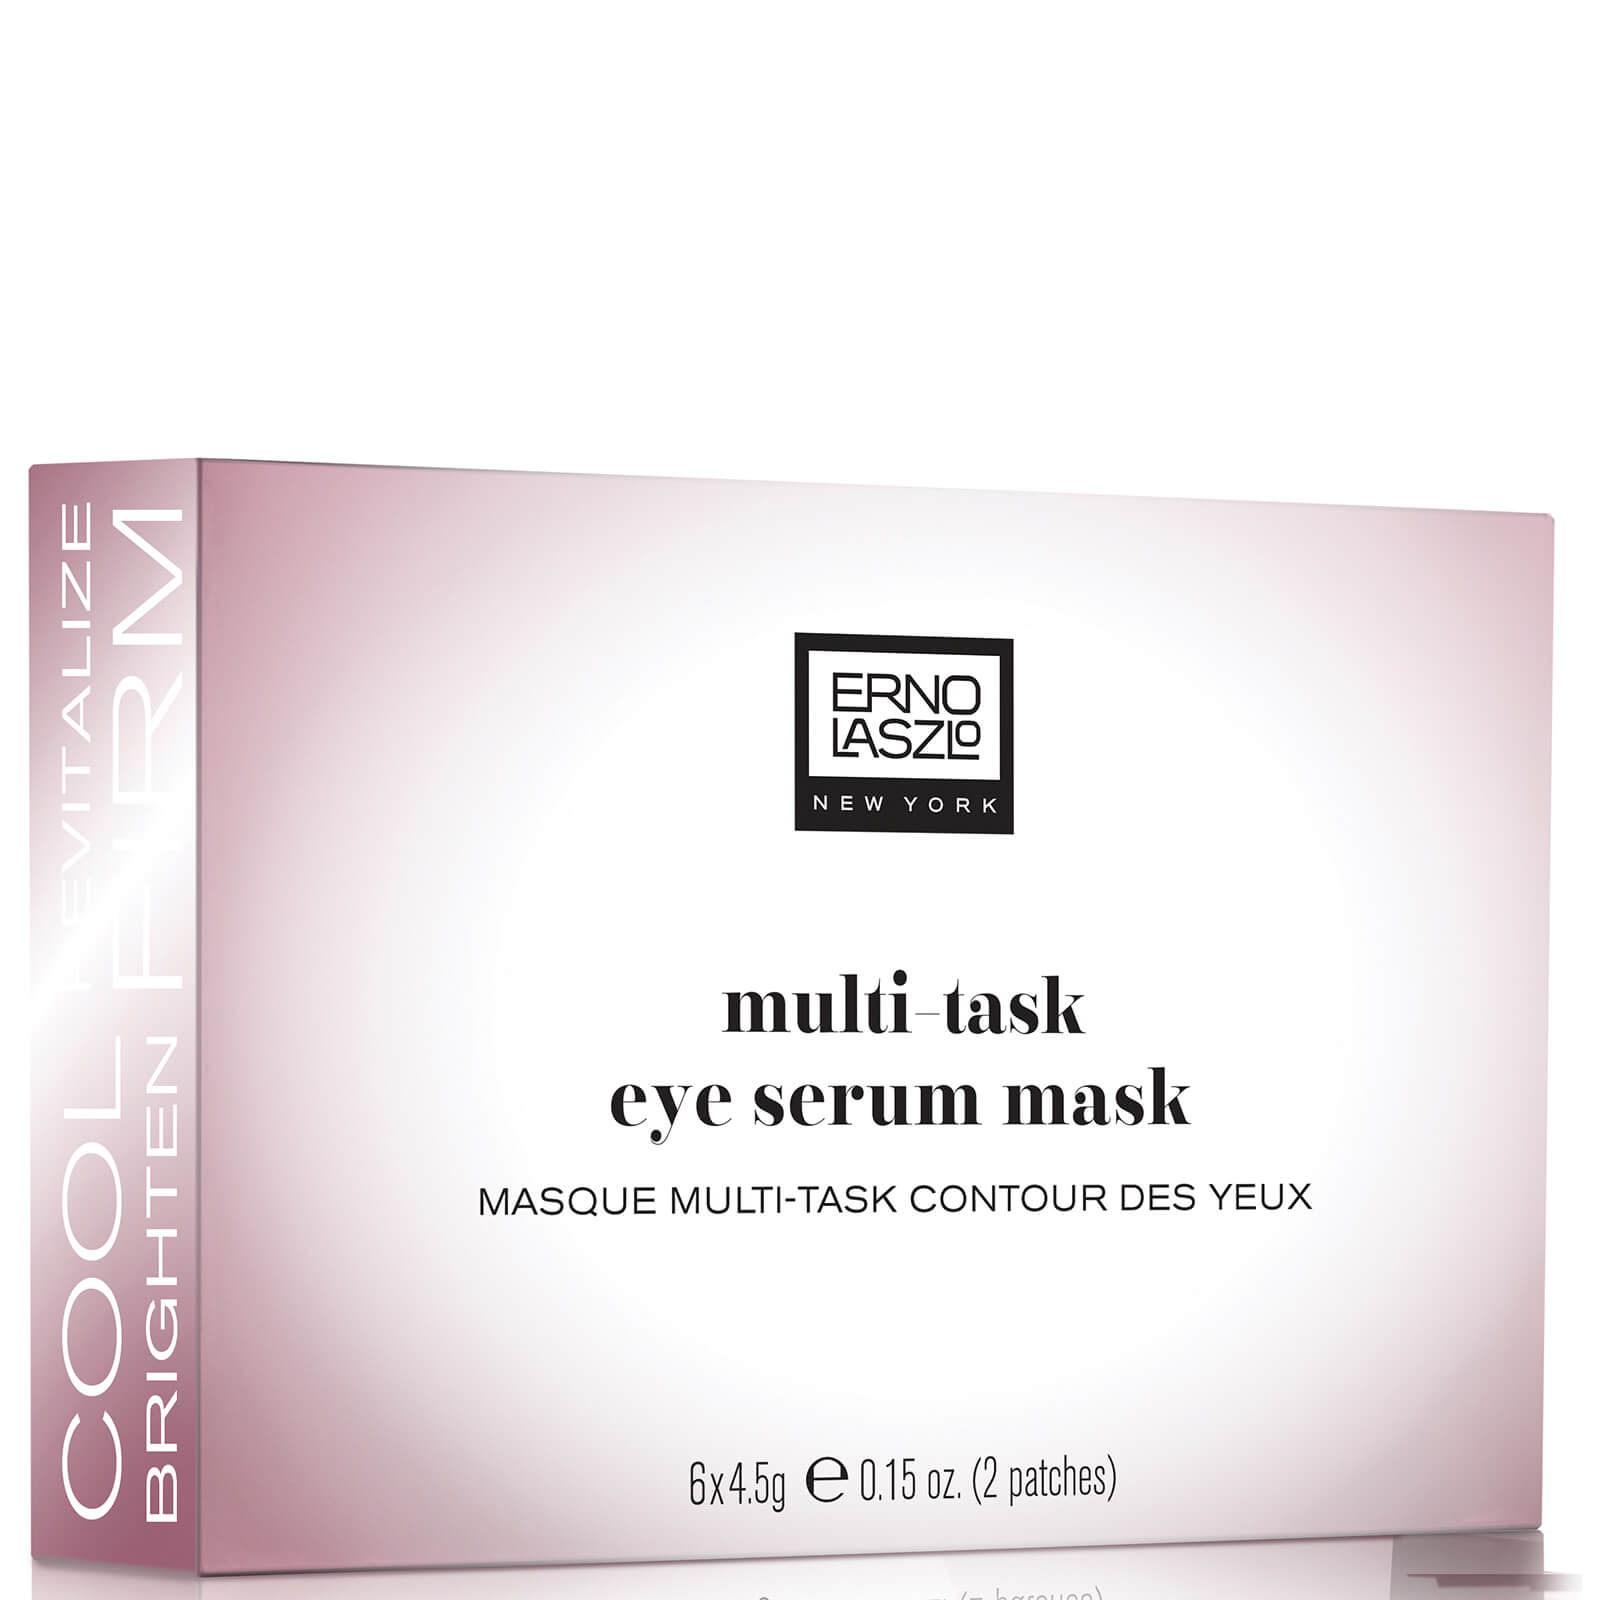 Erno Laszlo Multi-Task Eye Serum Mask (6 Pack) lookfantastic.com imagine